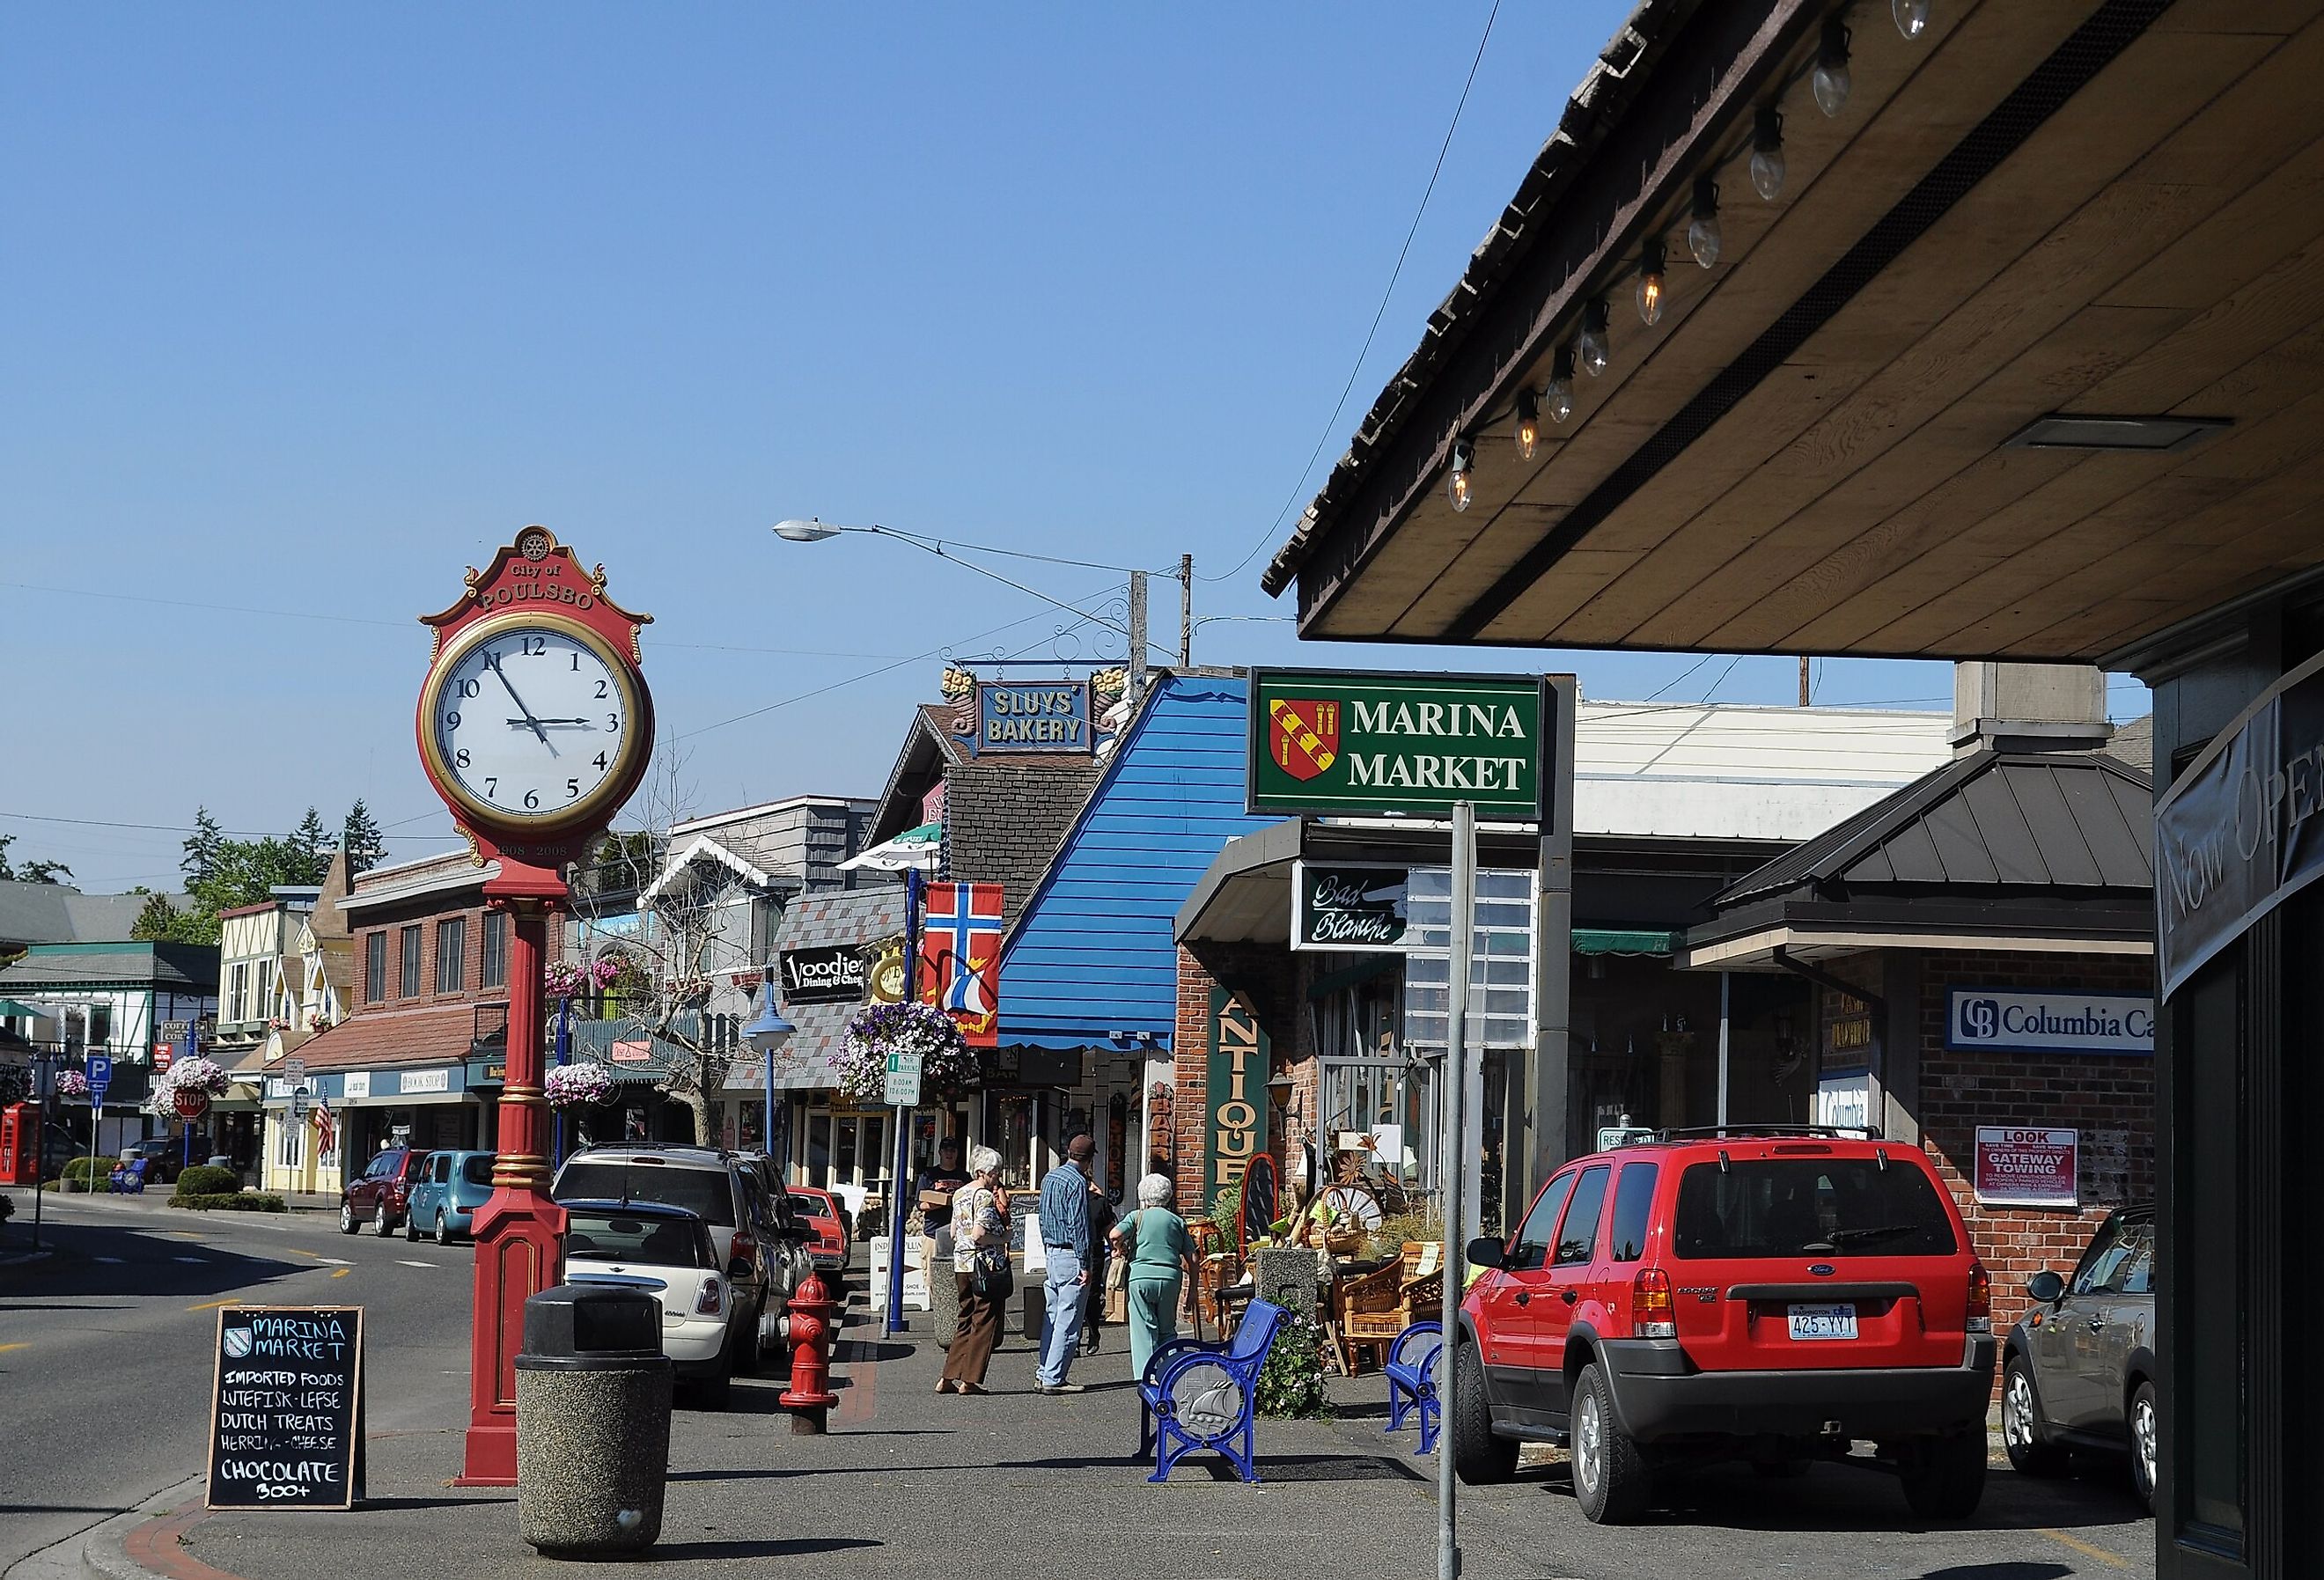 Front Street, Poulsbo, Washington. Image credit Joe Mabel, CC BY-SA 3.0 <https://creativecommons.org/licenses/by-sa/3.0>, via Wikimedia Commons